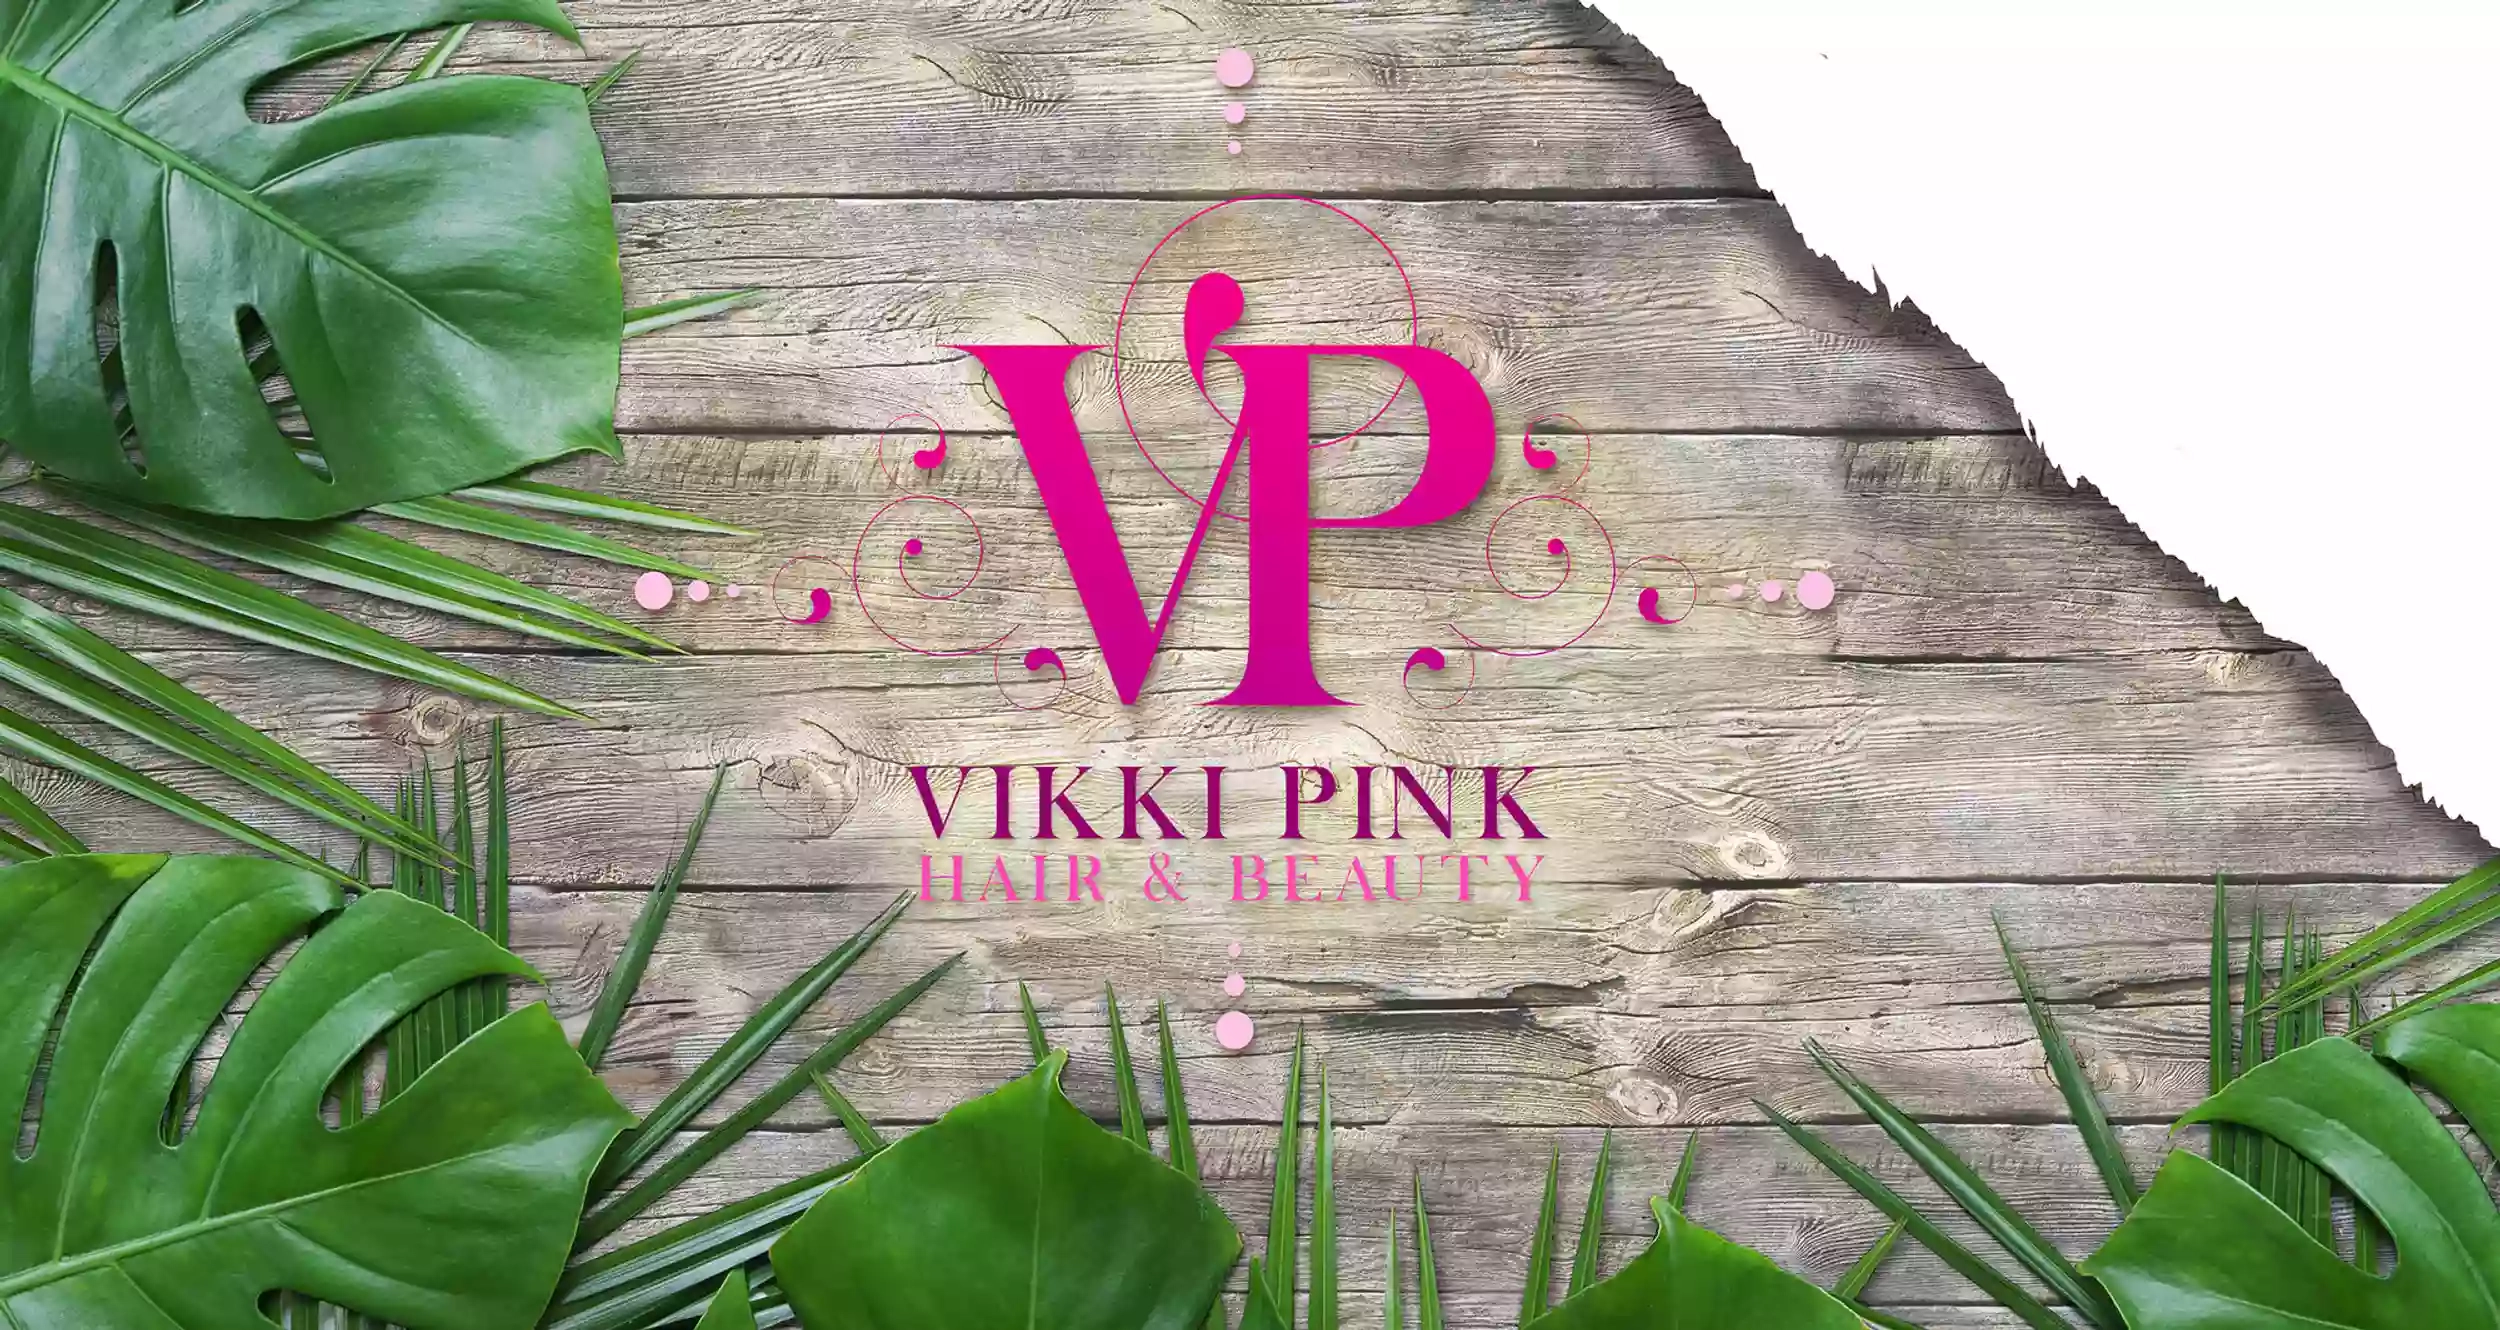 Vikki Pink Hair and Beauty